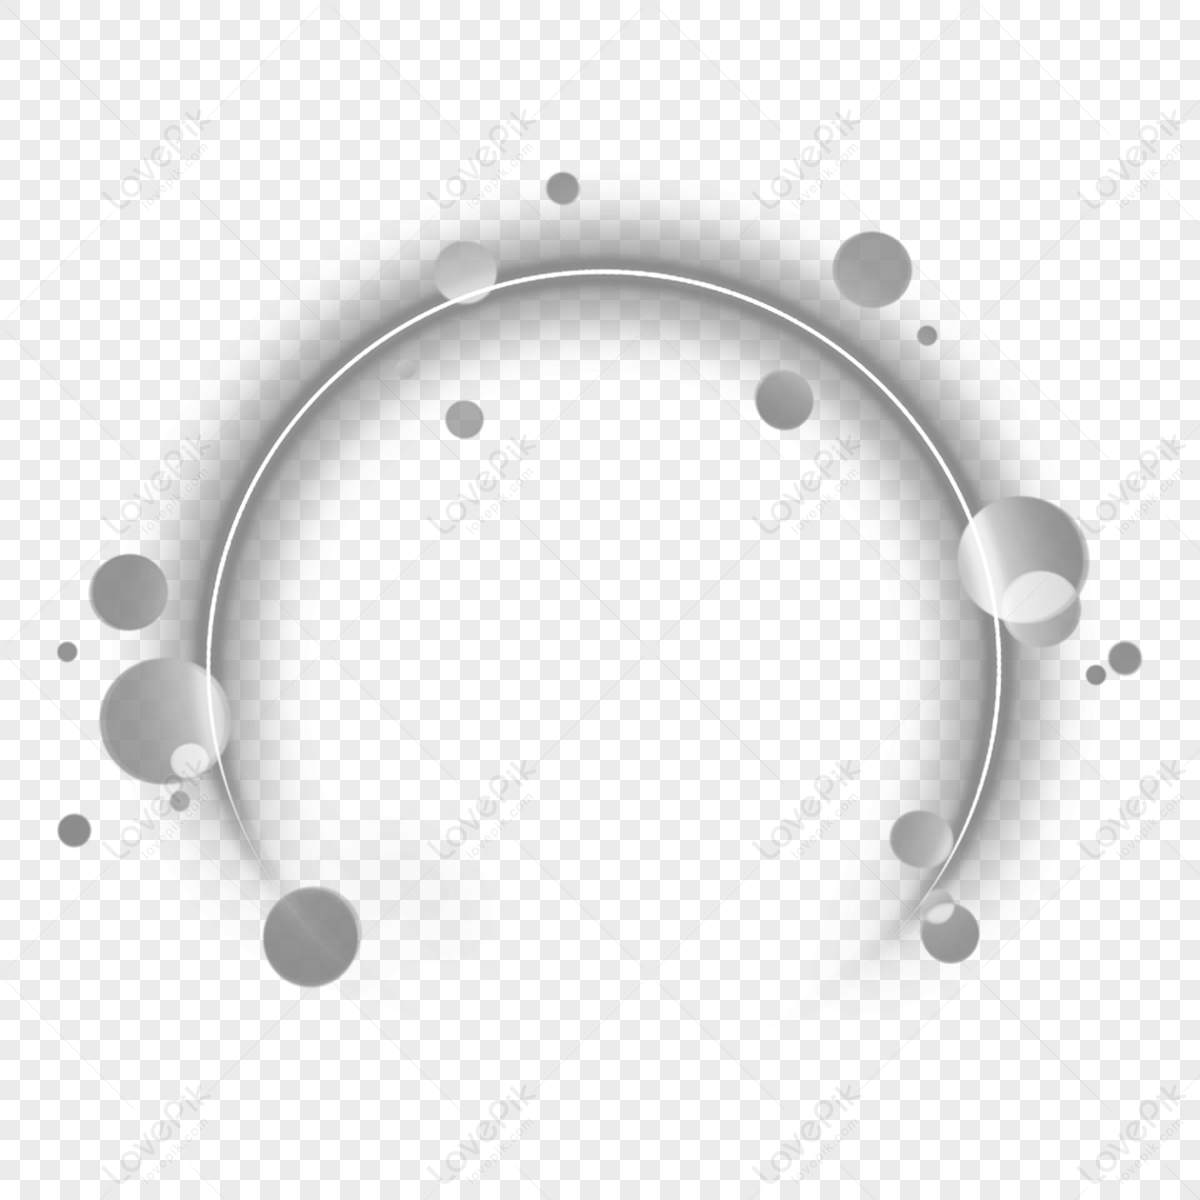 Light Ring PNG Transparent Images Free Download | Vector Files | Pngtree